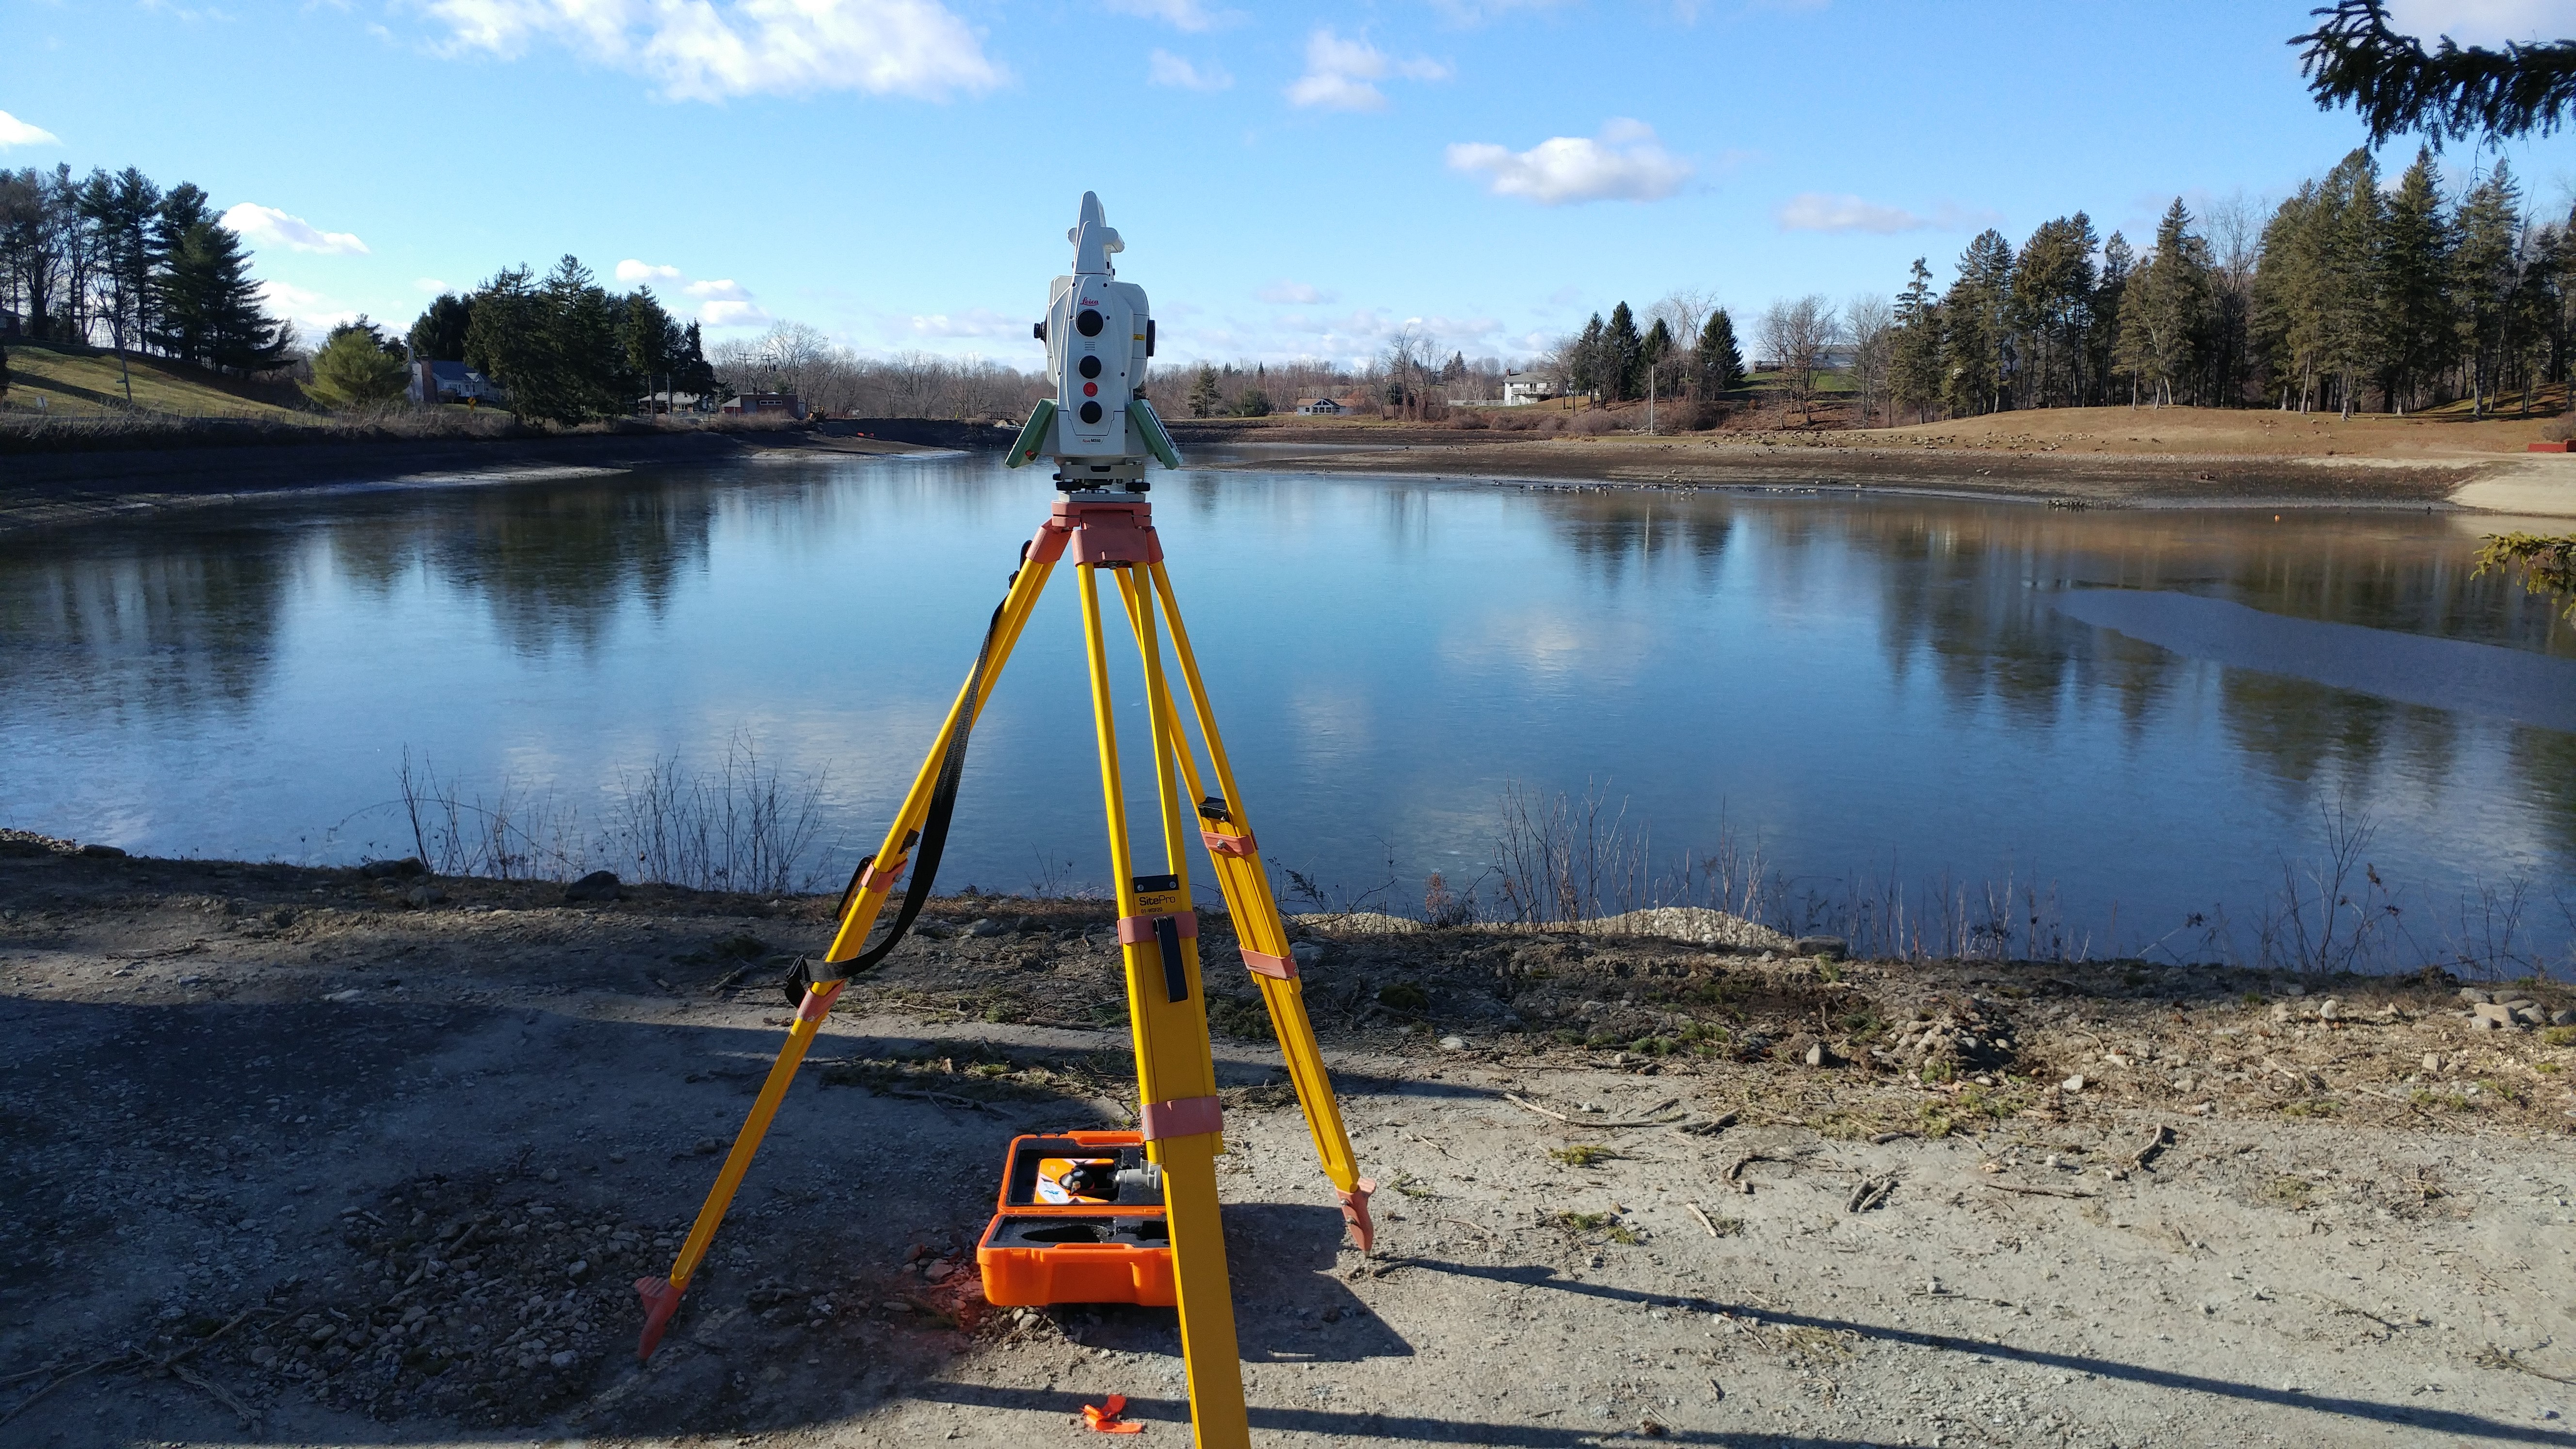 land surveyor tools